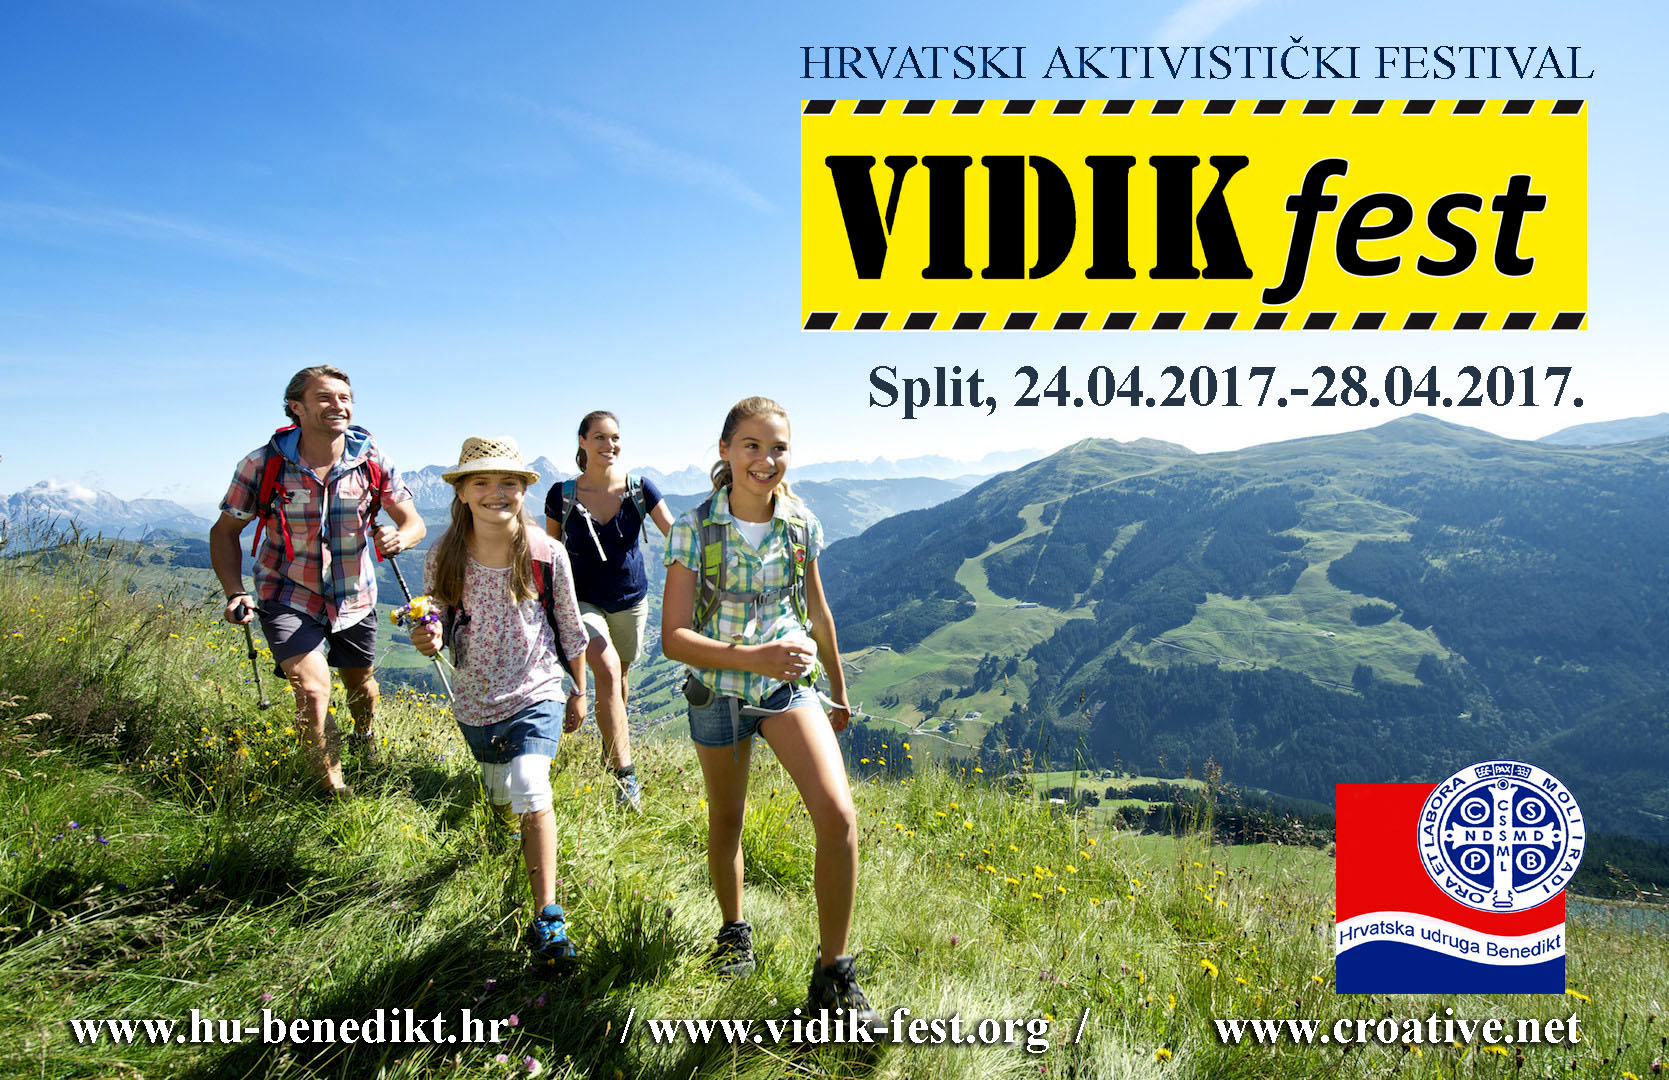 Hrvatski aktivistički festival VIDIK fest